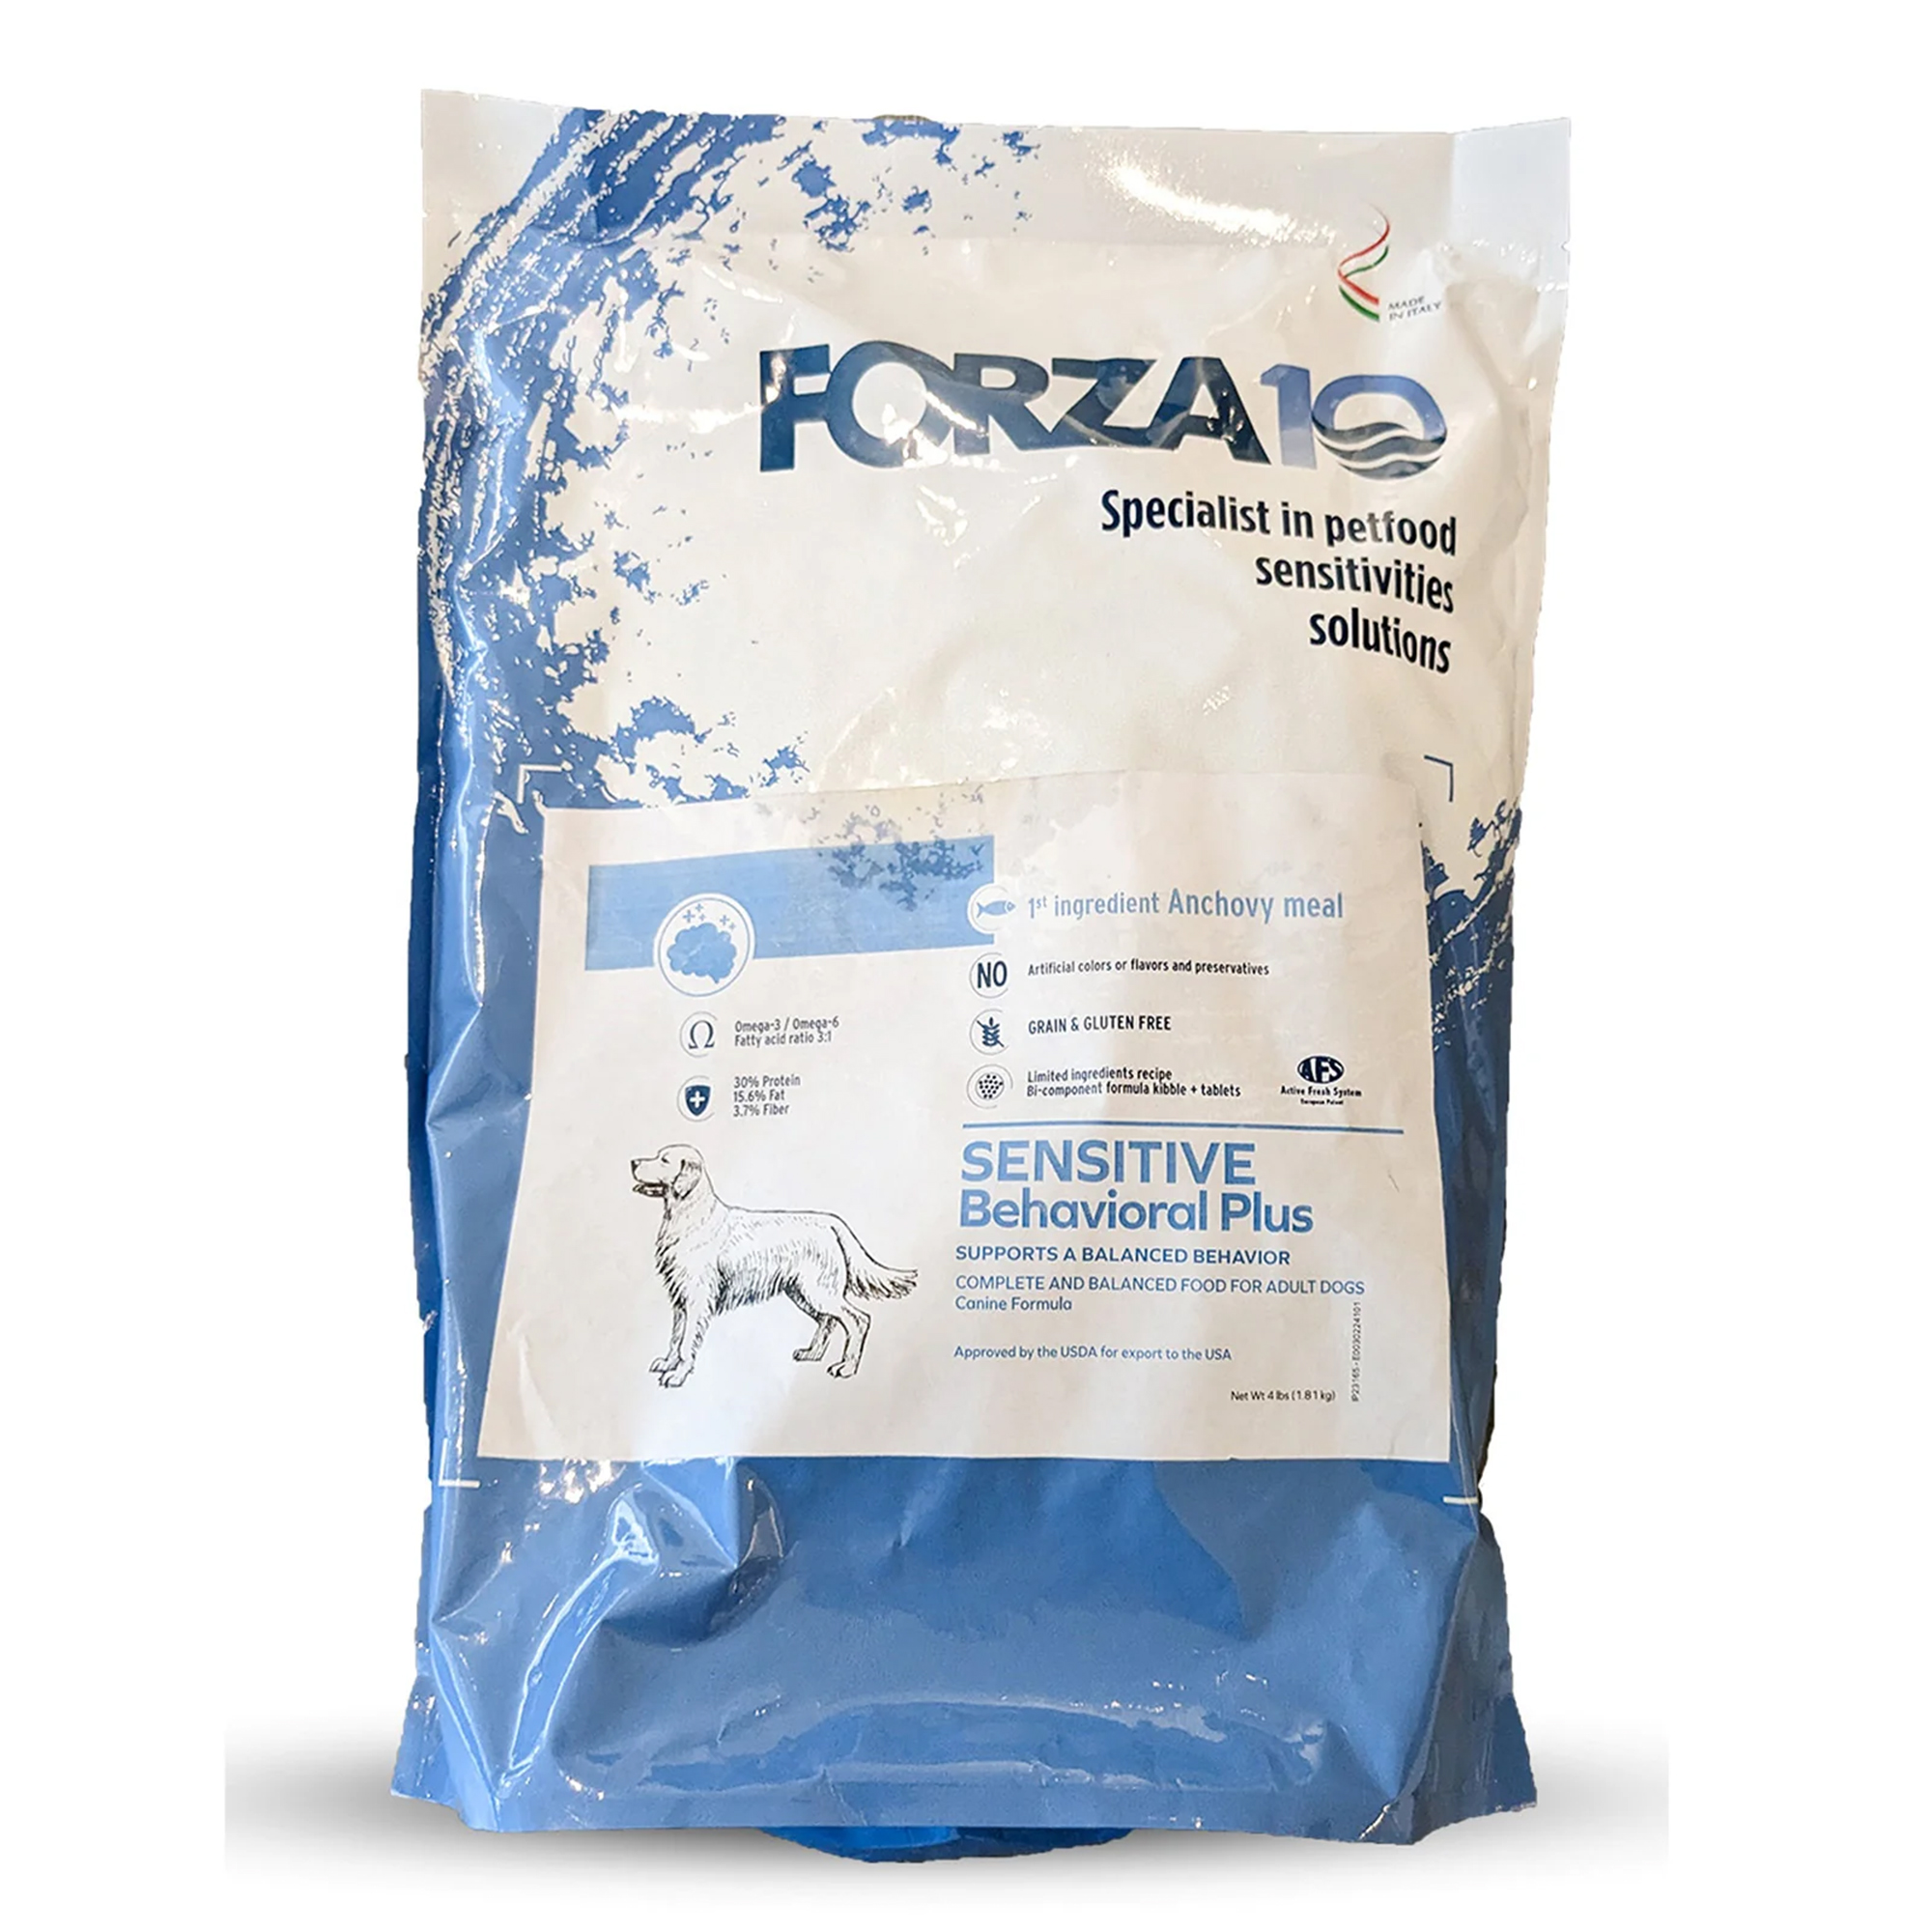 Forza10 Nutraceutic Sensitive Behavioral Plus Grain Free Dry Dog Food Usage